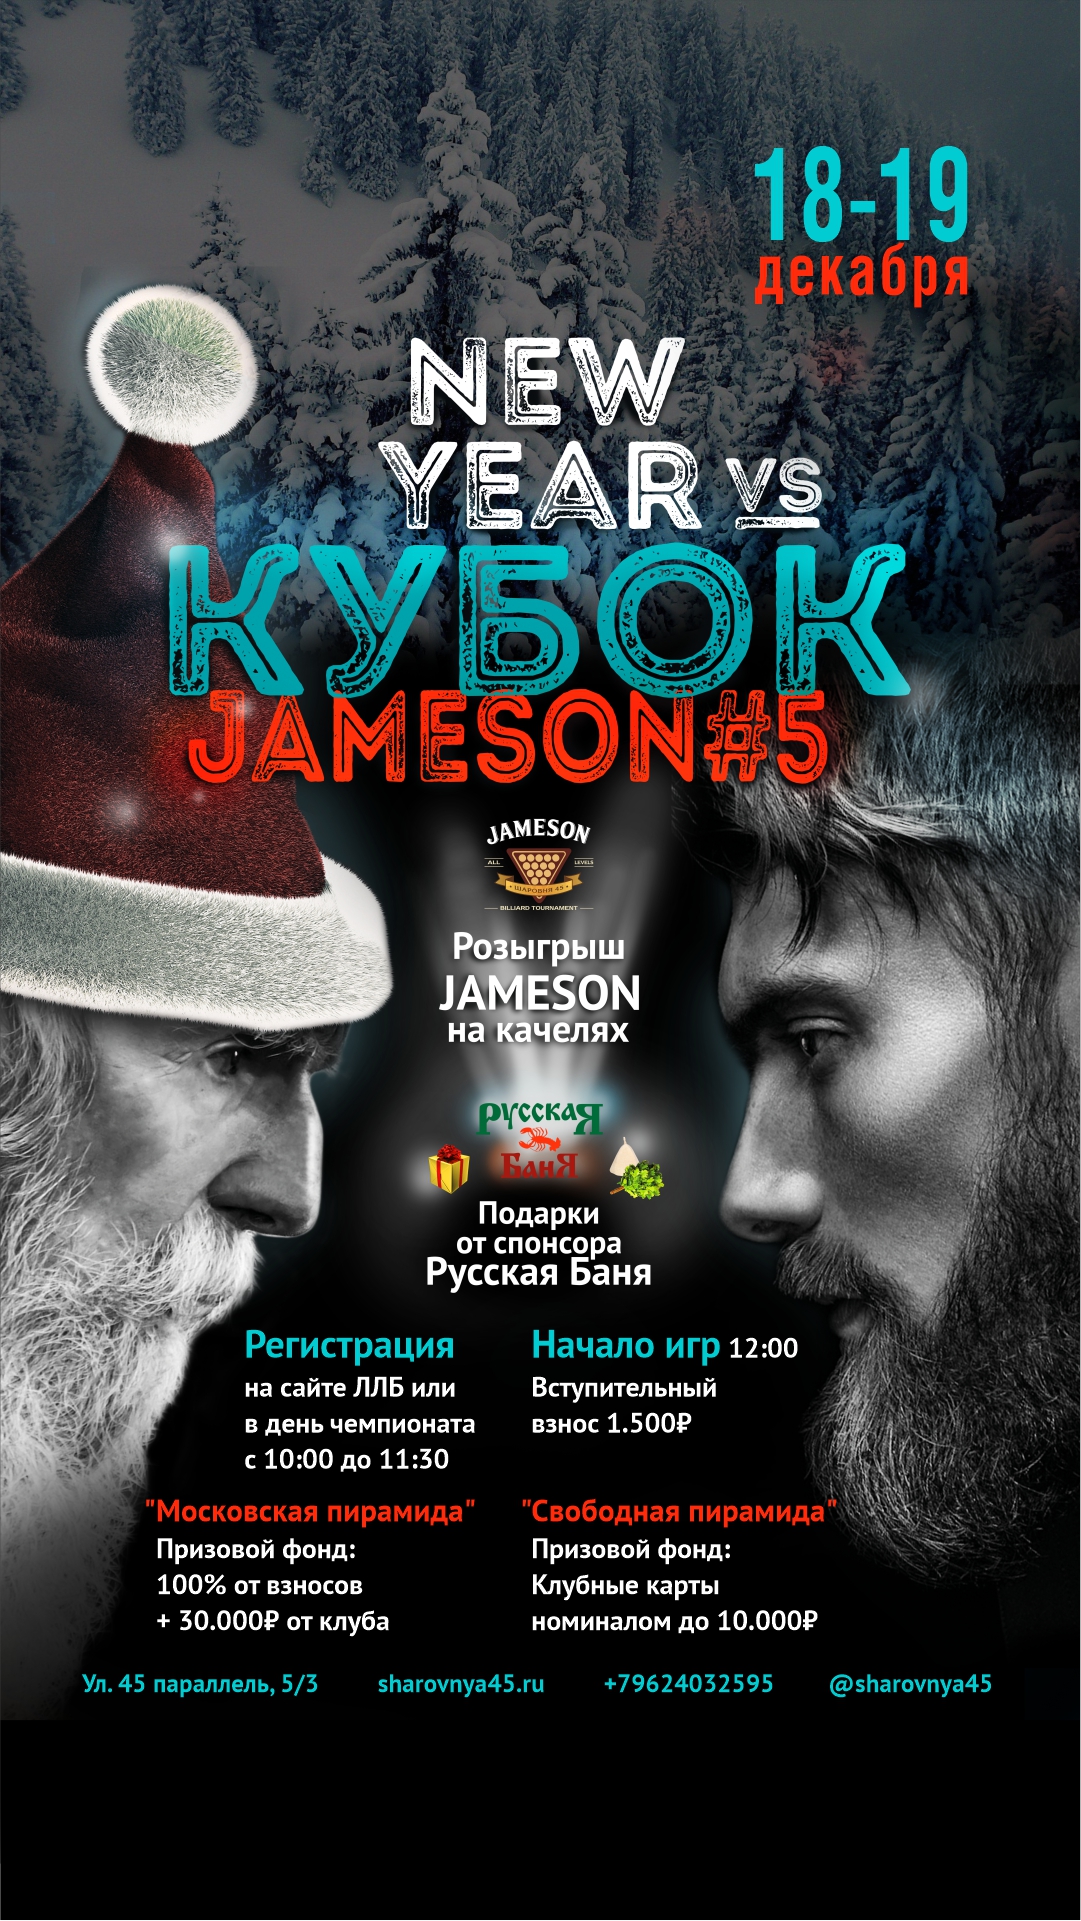 New Year vs Кубок Jameson #5